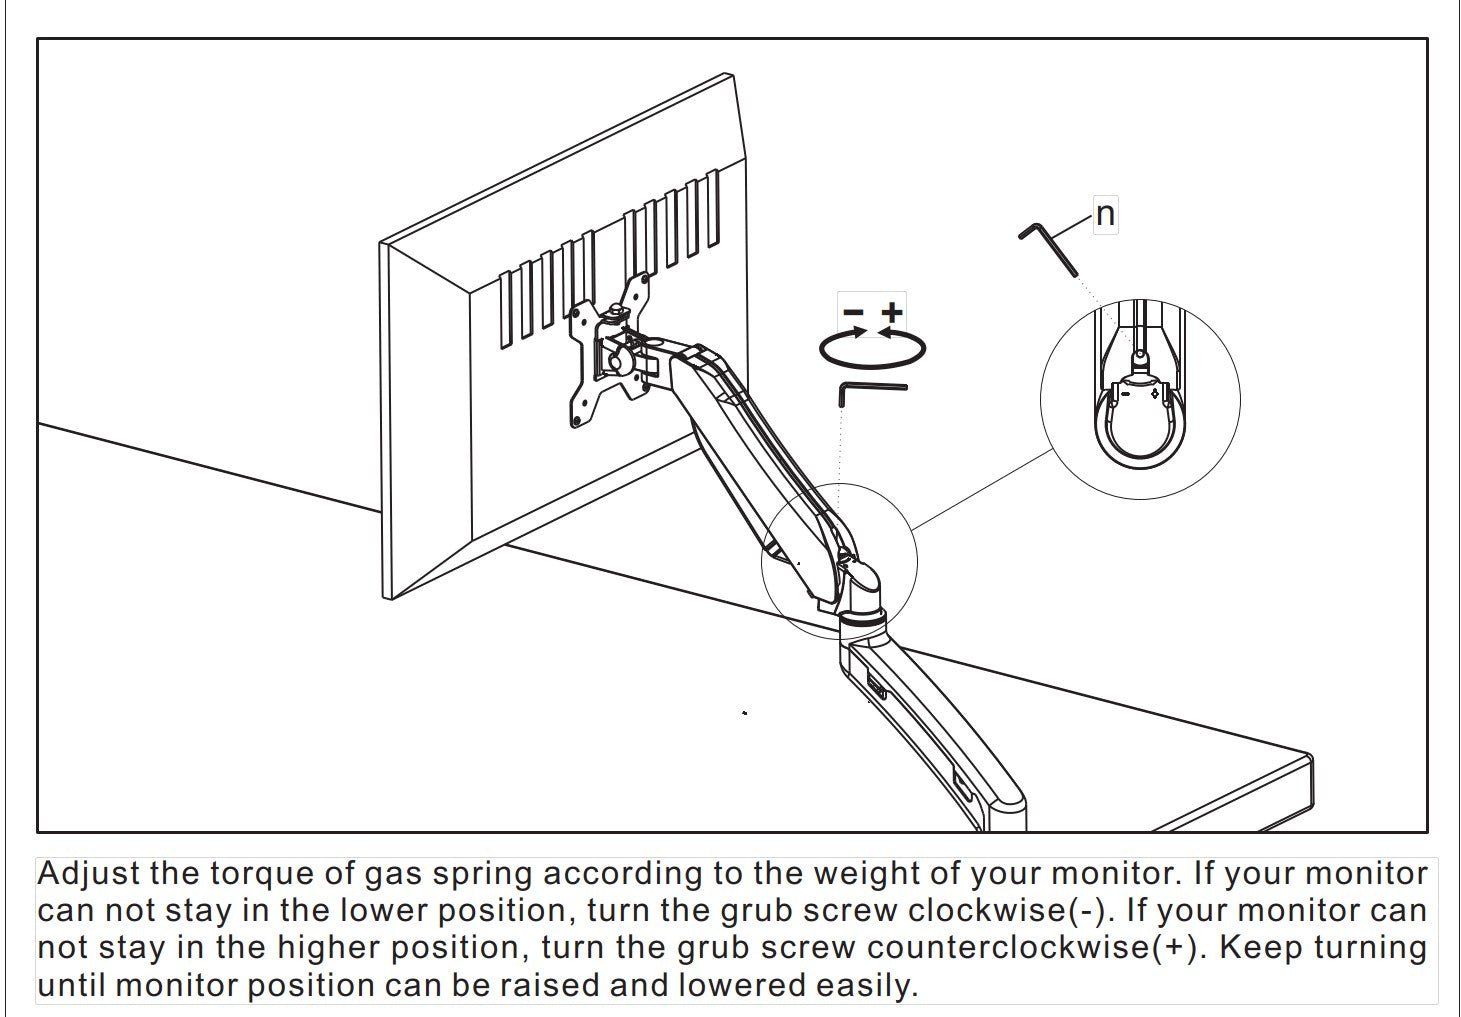 FRISKA Visby monitor arm: How to adjust the torque